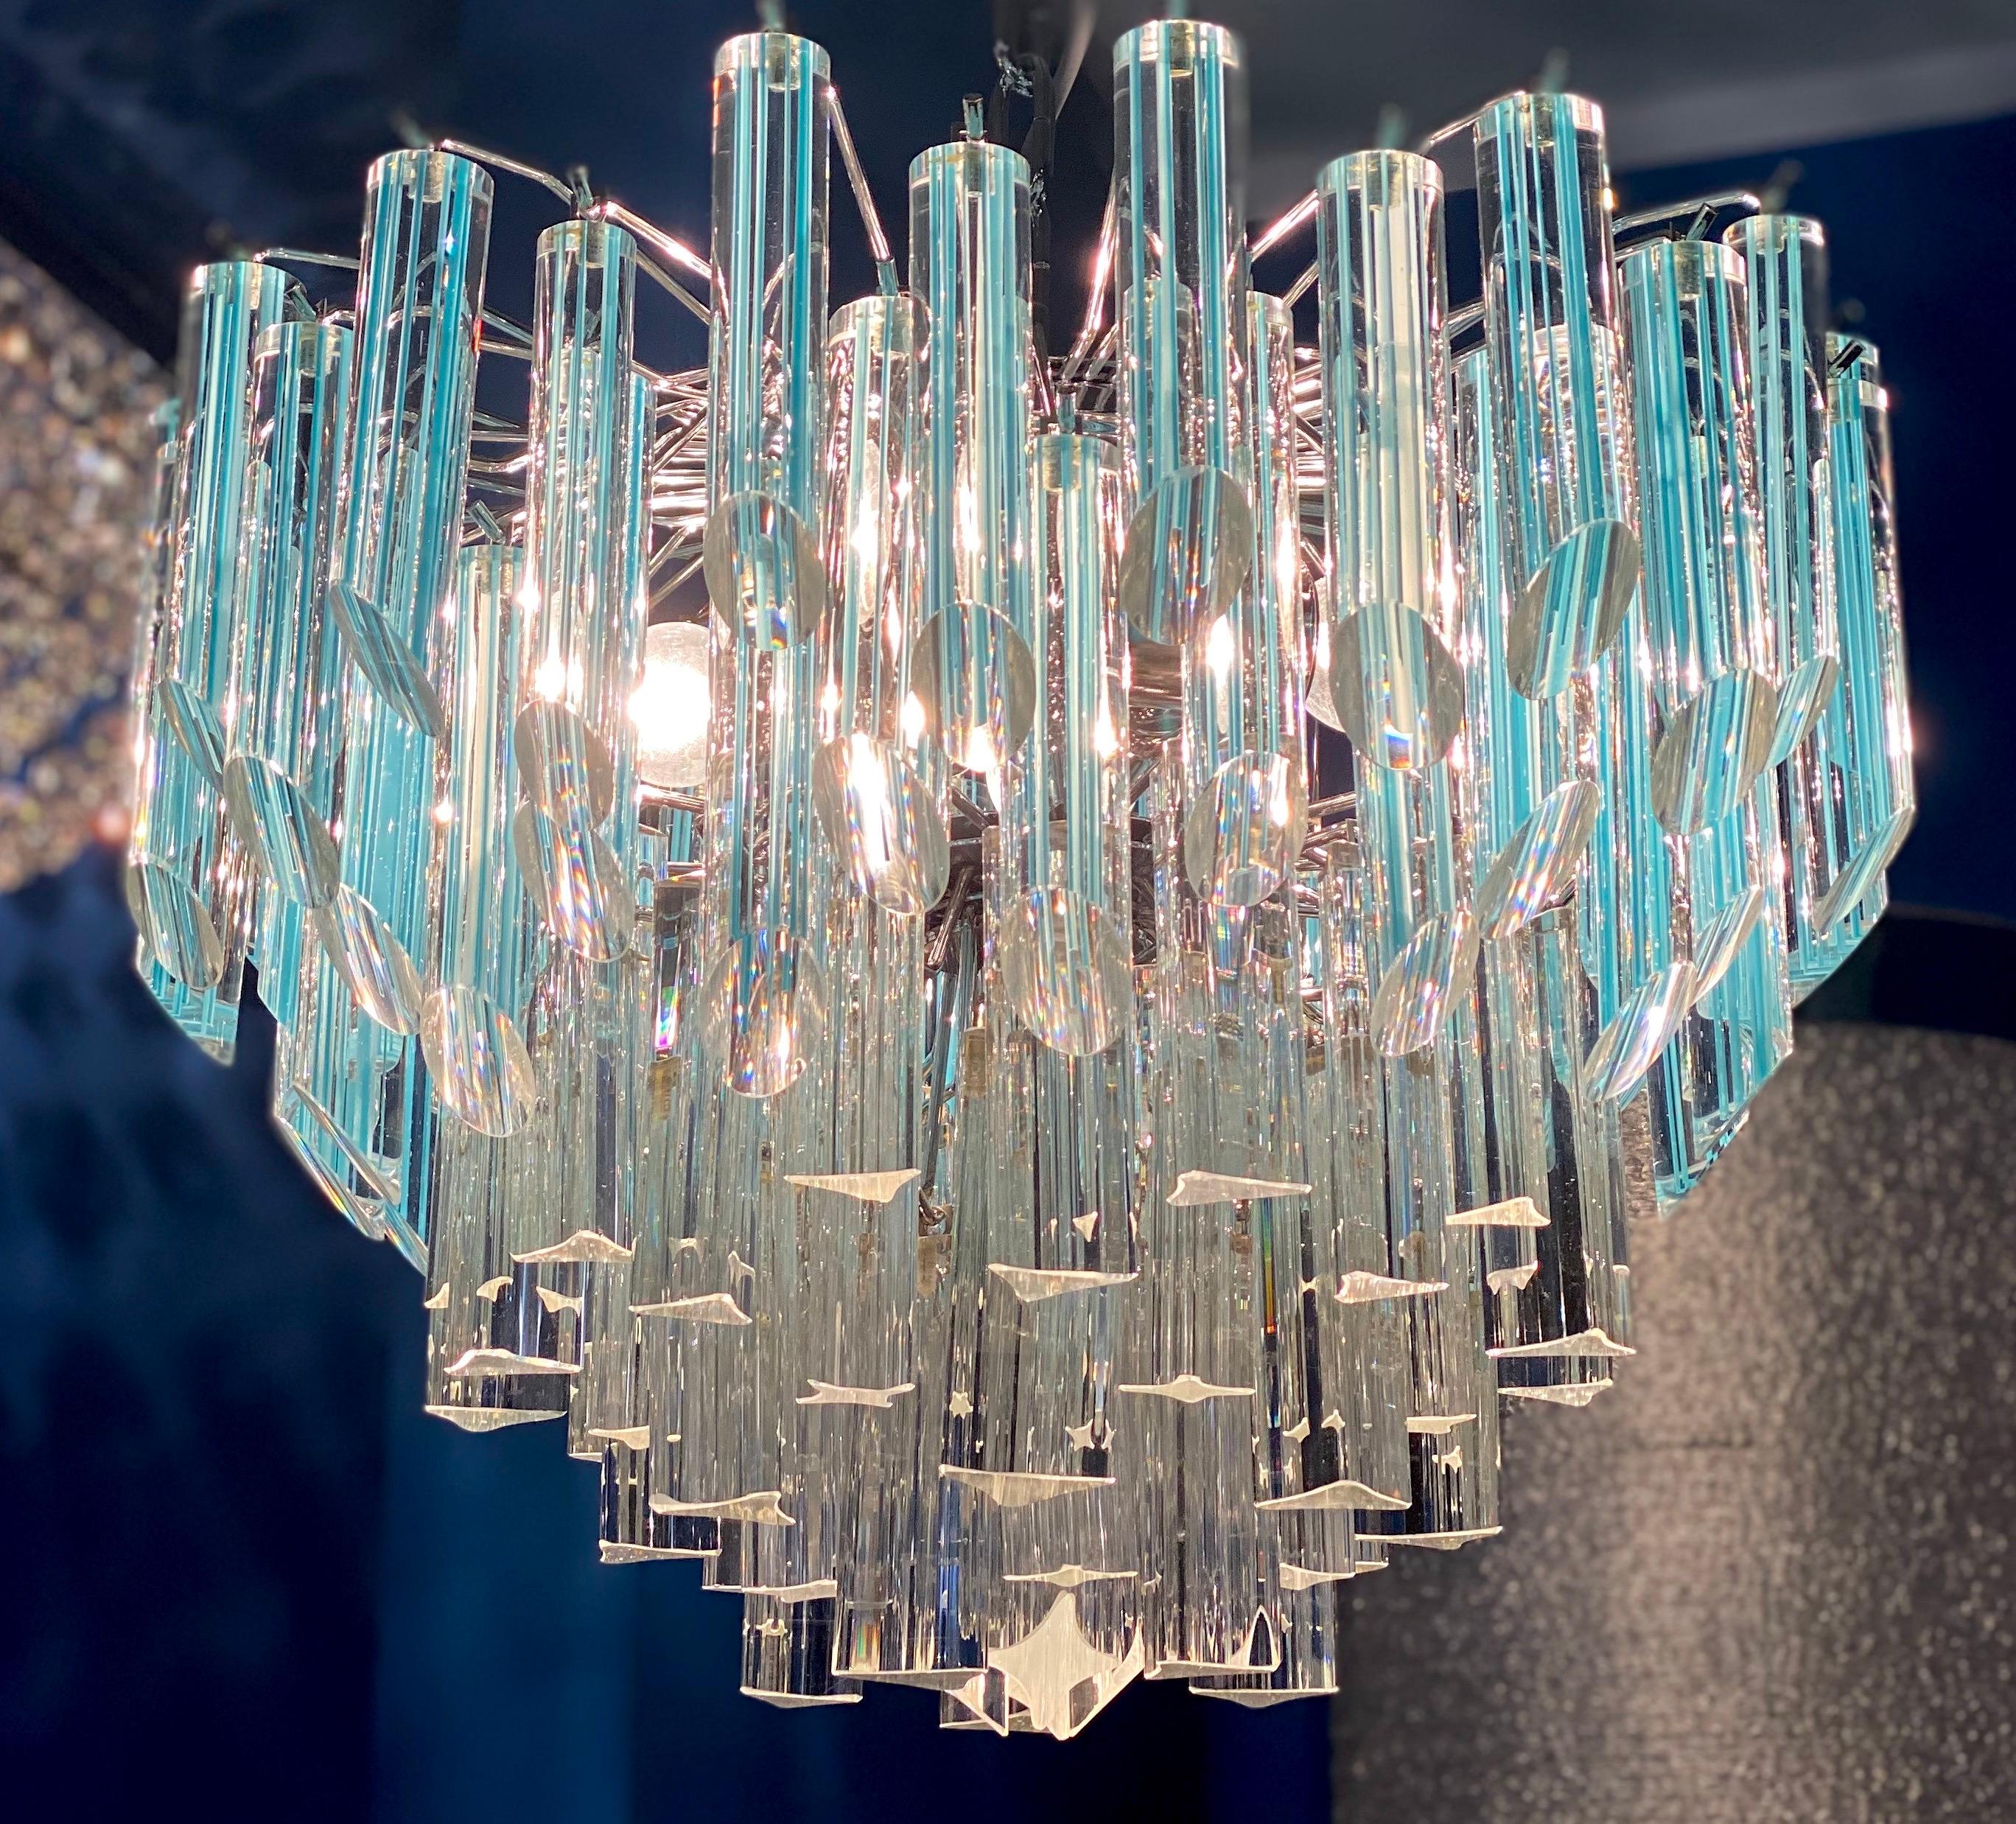 Magnificent multitier triedi crystal chandelier, with light blu pendants 1970.

Height:
45 cm glass + 40 cm chain = total height 85 cm.
Diameter:
(45 cm).